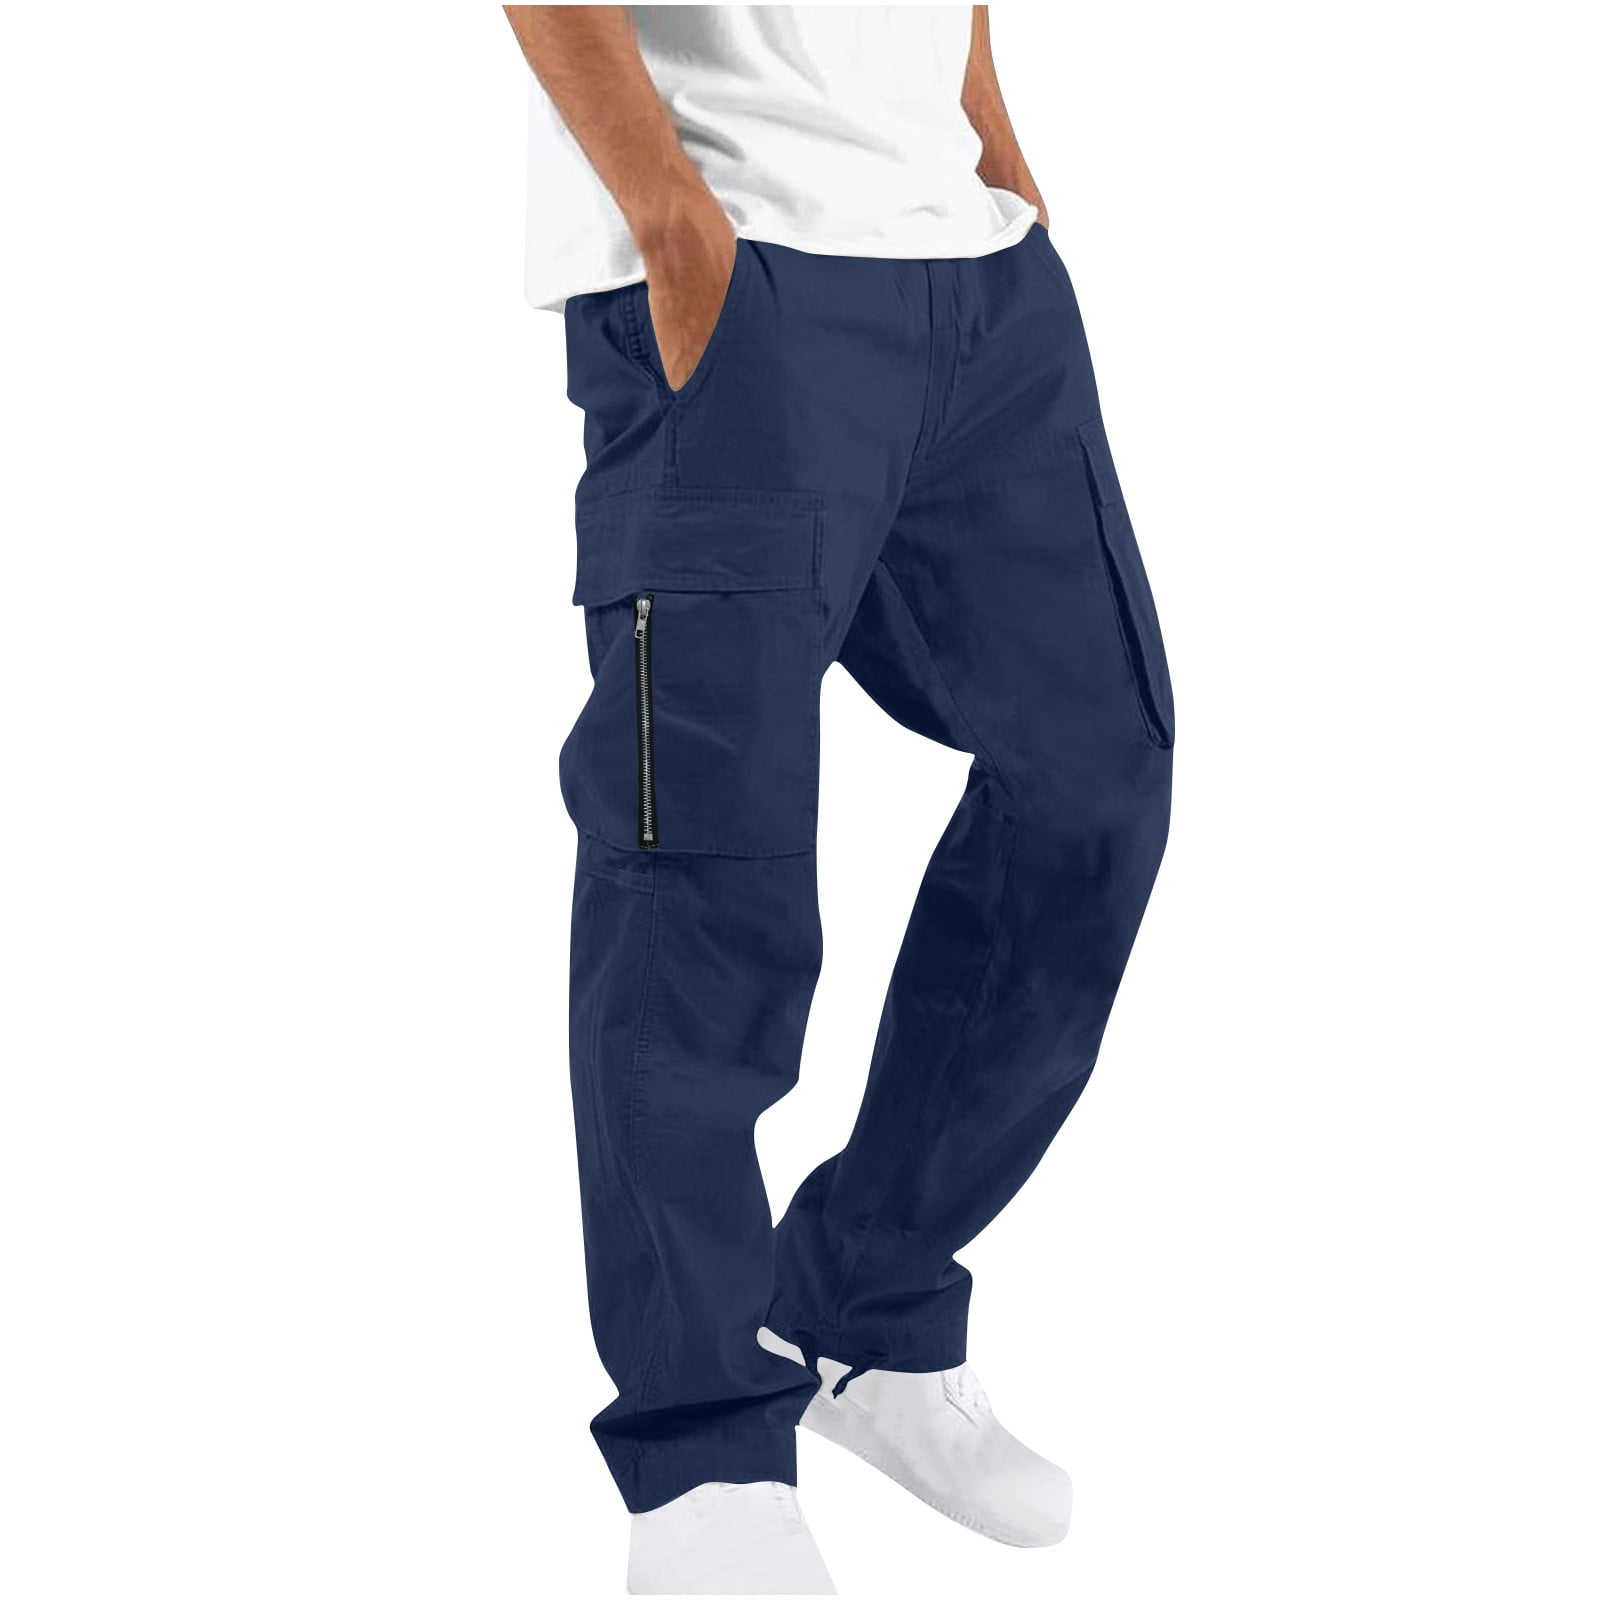 gakvbuo Cargo Pants For Men Athletic Casual Outdoor Resistant